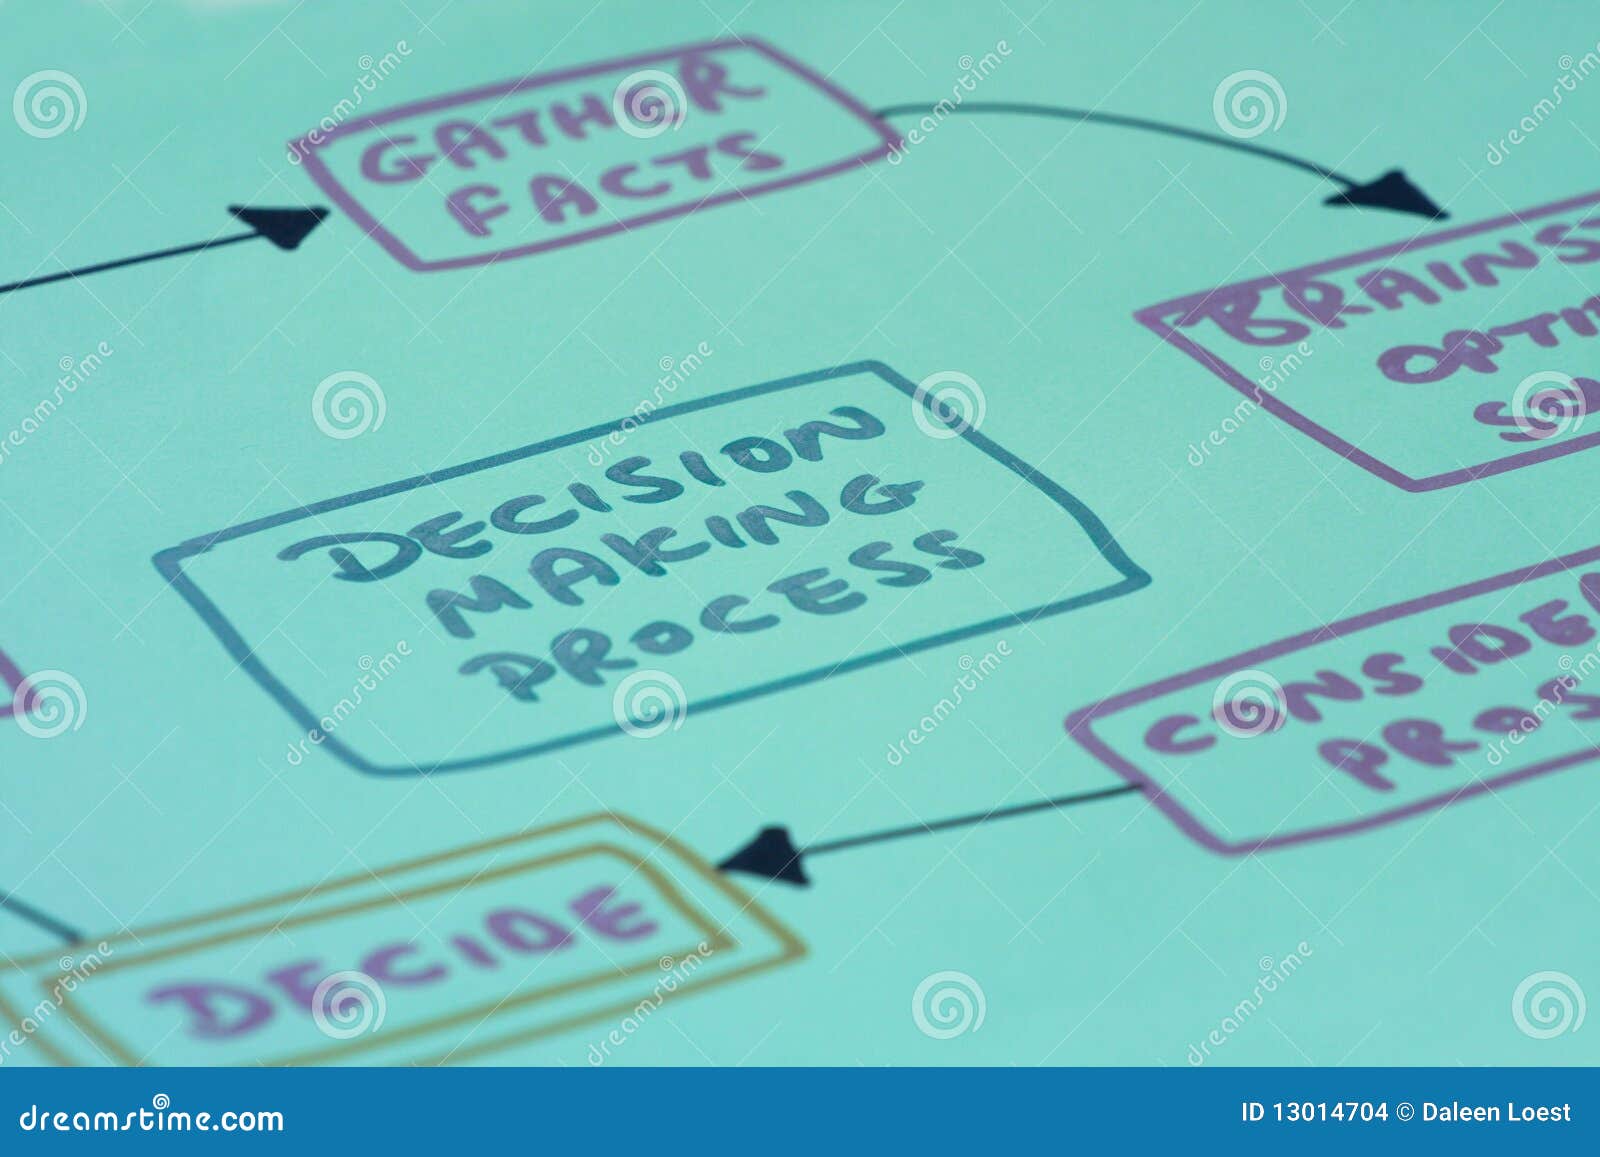 diagram of decision making process